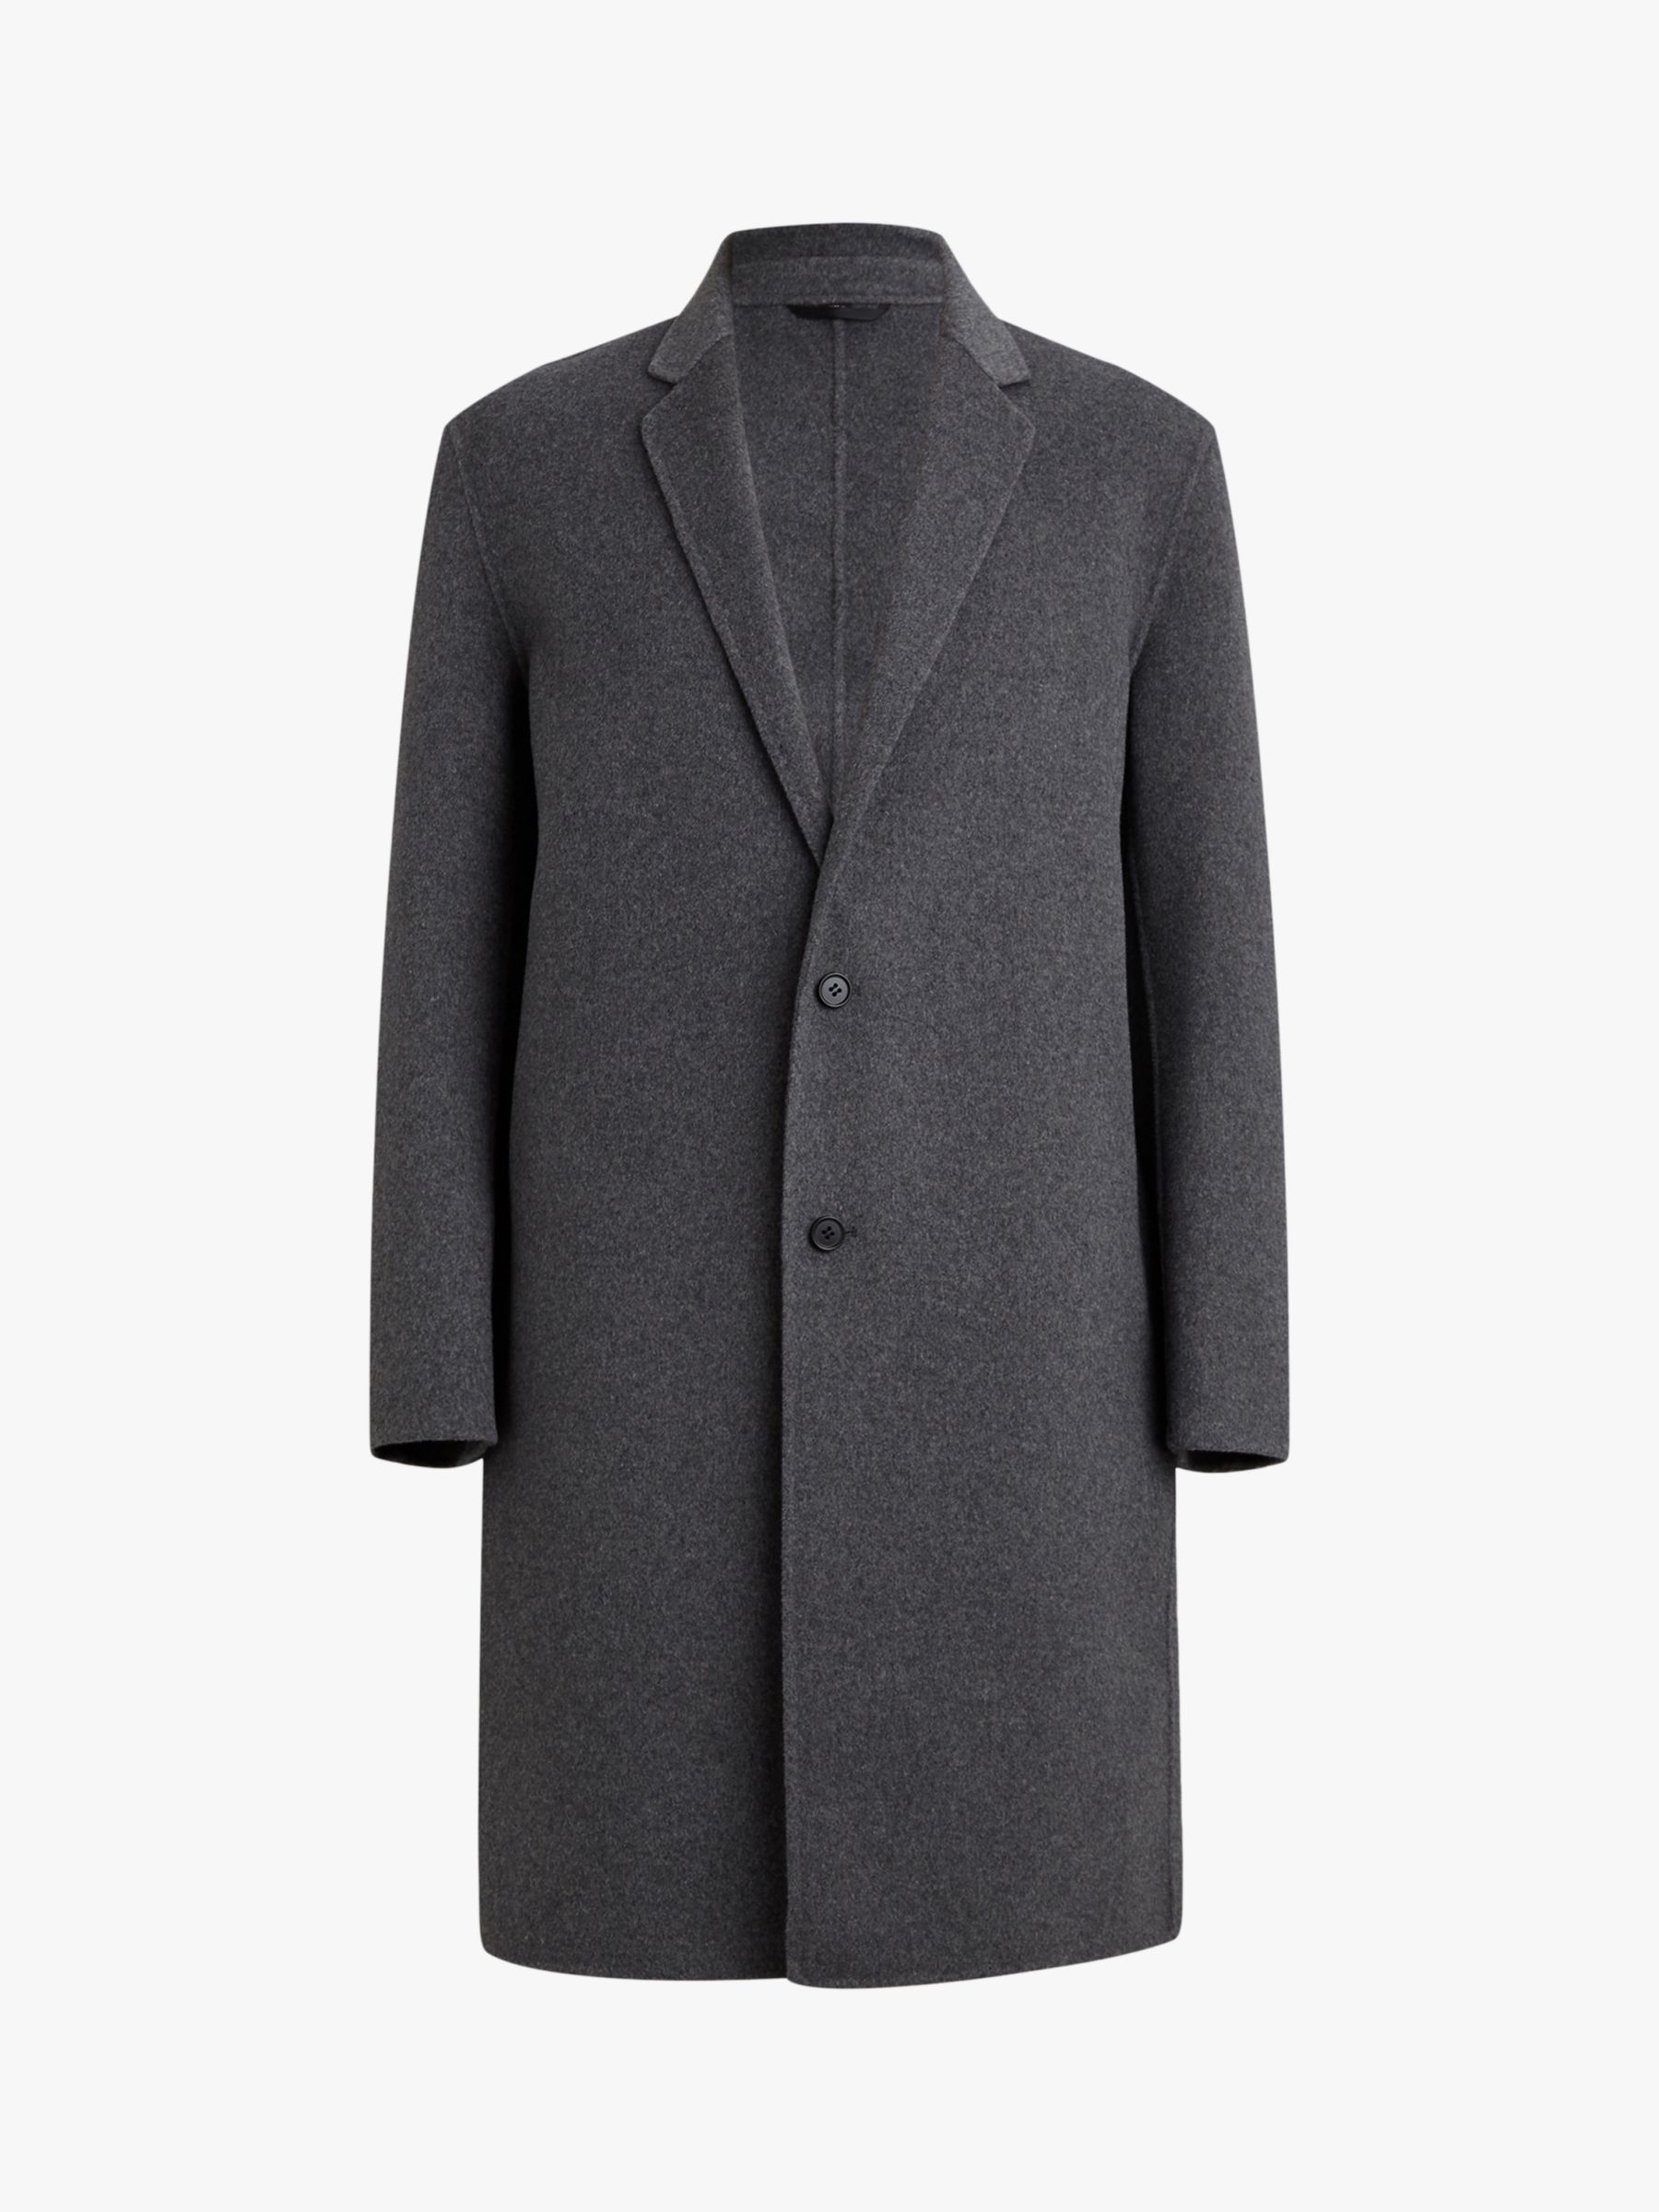 AllSaints Foley Wool-Blend Overcoat, Grey Marl at John Lewis & Partners